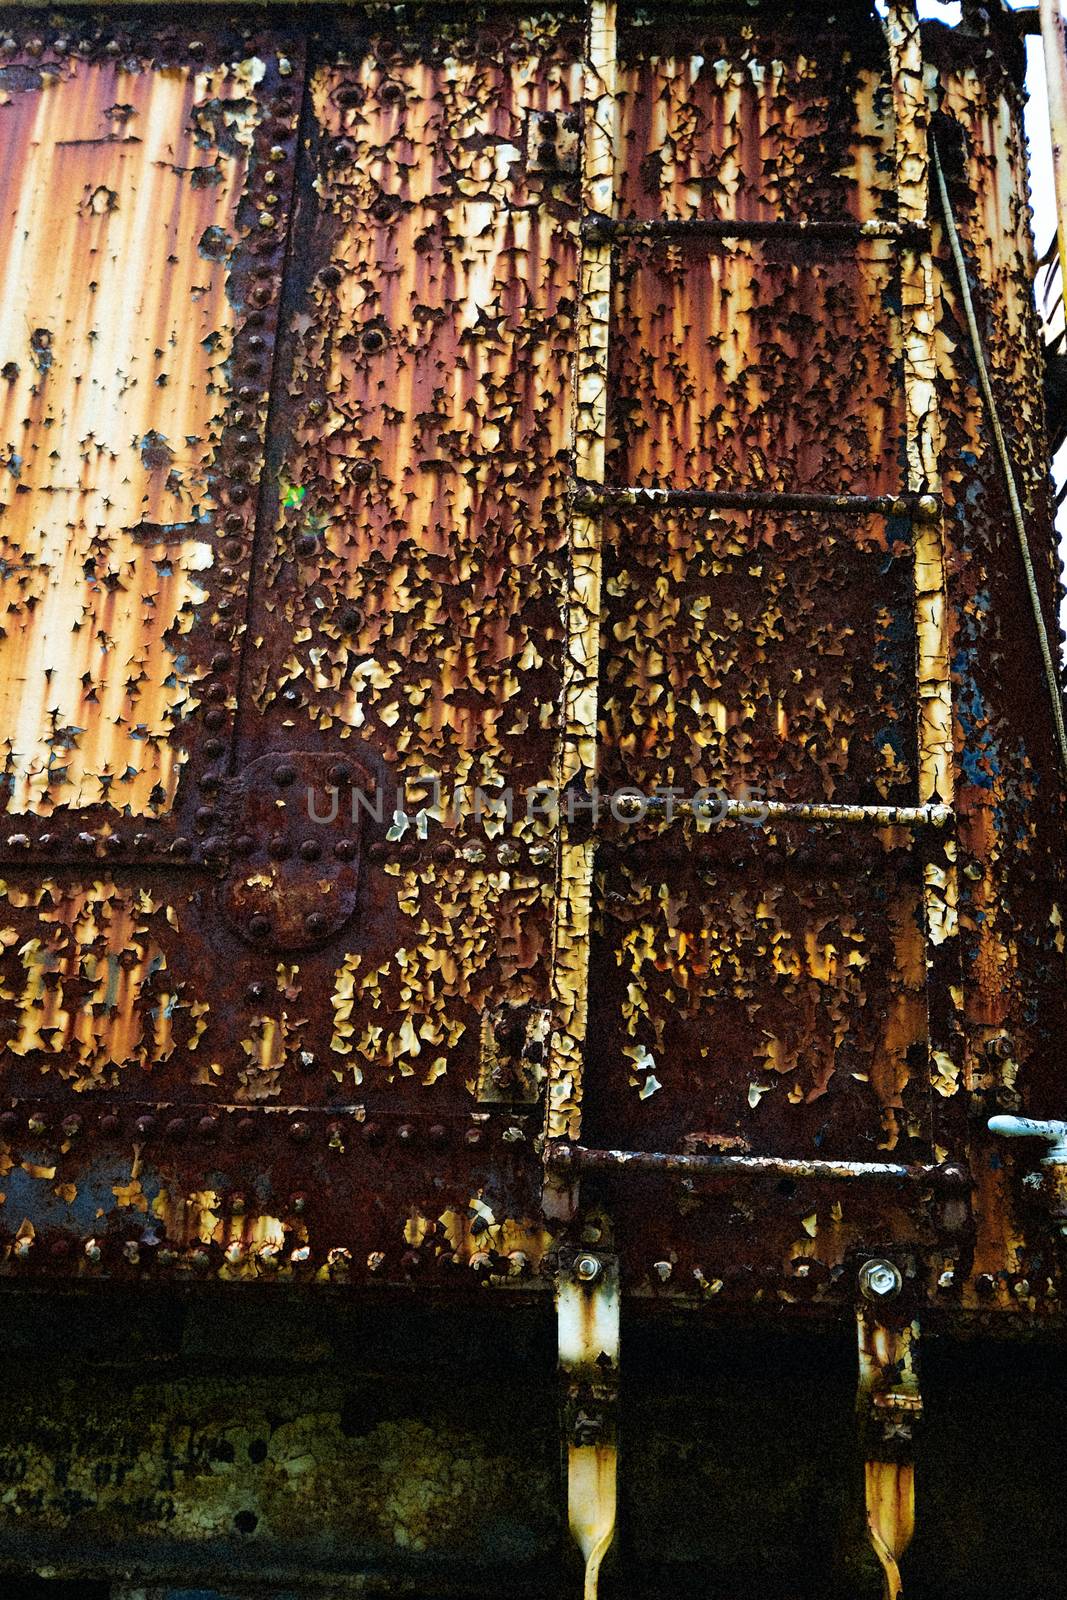 Rusty Ladder on Old Train by dbvirago